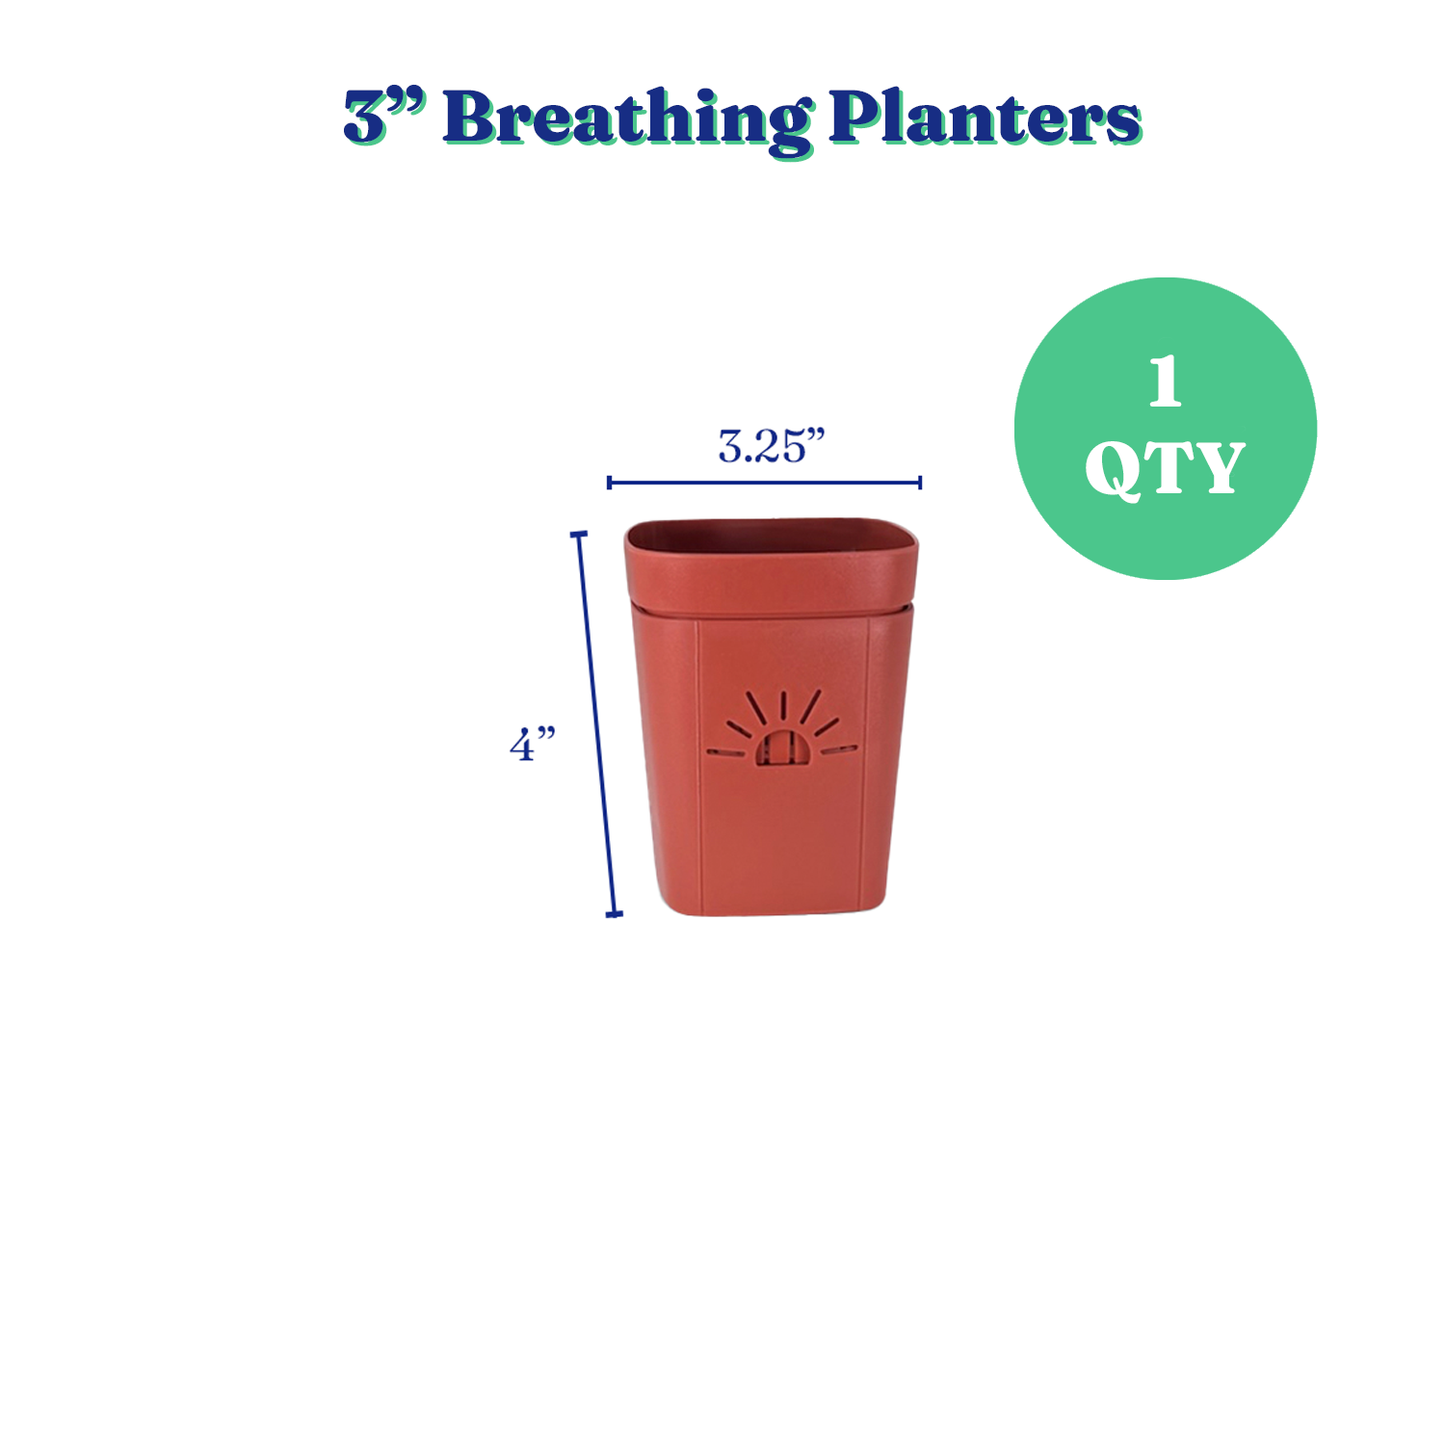 3-Inch "Breathing" Planter